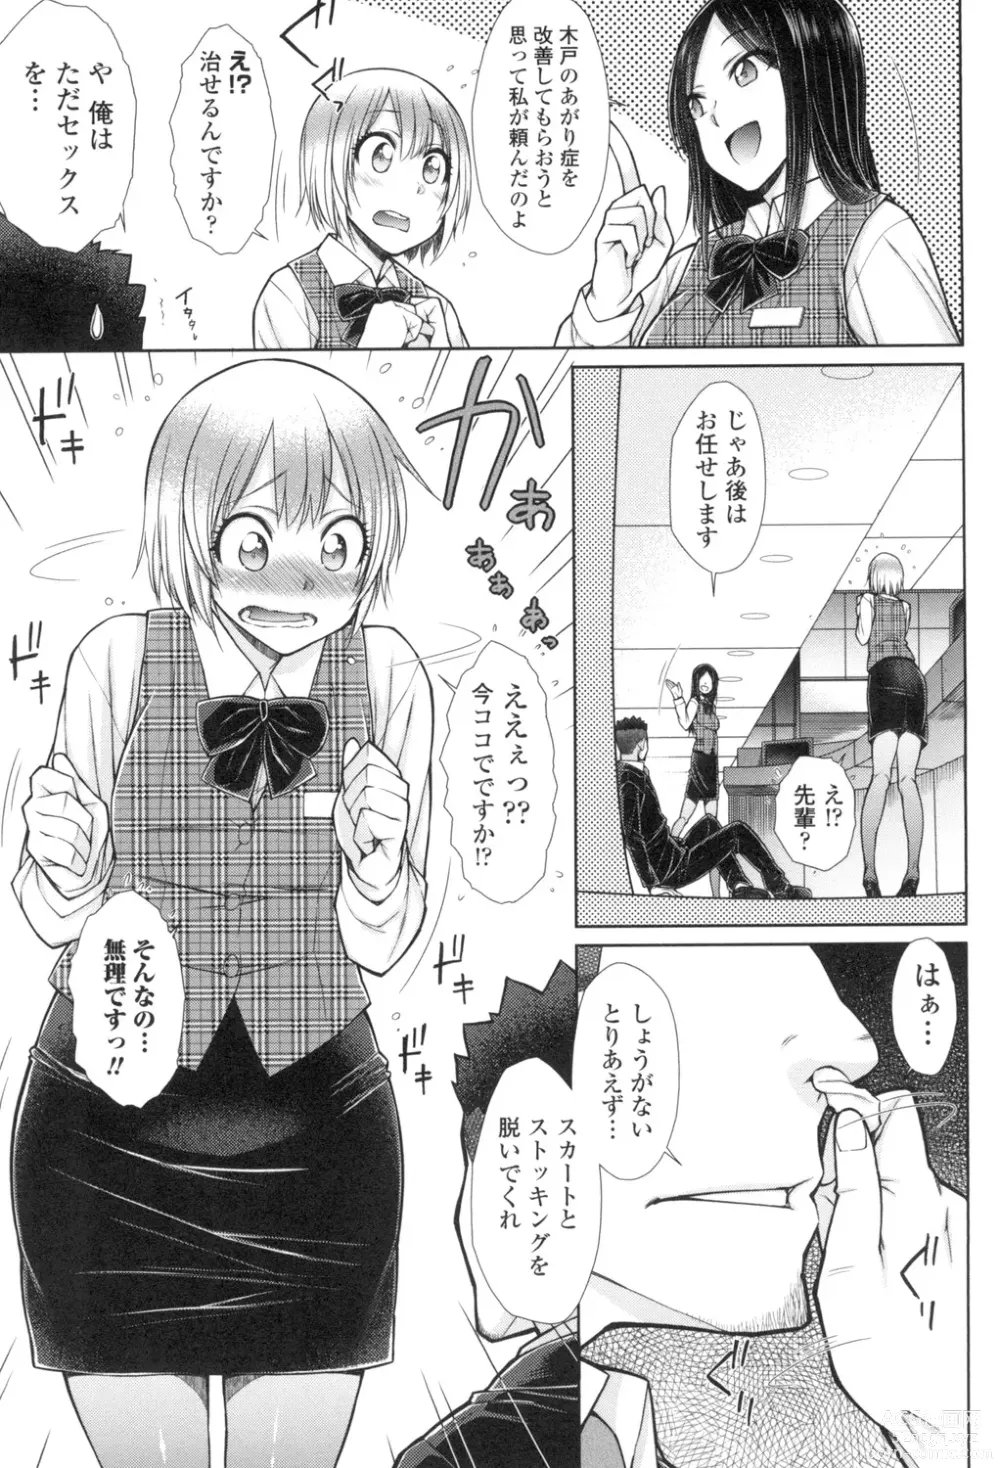 Page 30 of manga Kochira Joshi Shain Senyou Seishorika - Sex Industry Division for Womens Employees Dedicated